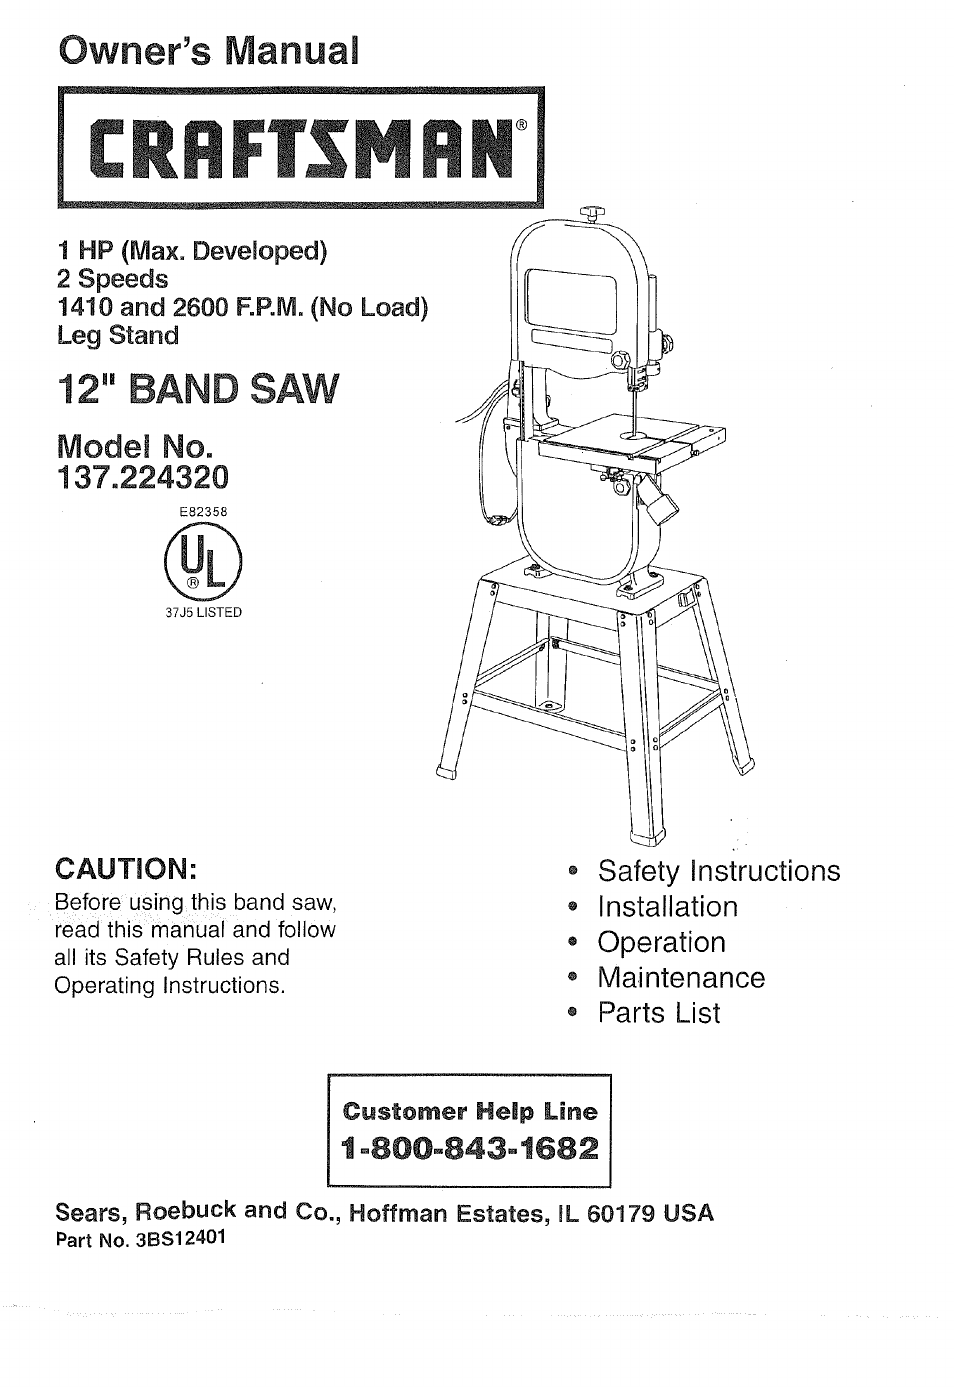 Craftsman 137.224320 User Manual | 25 pages